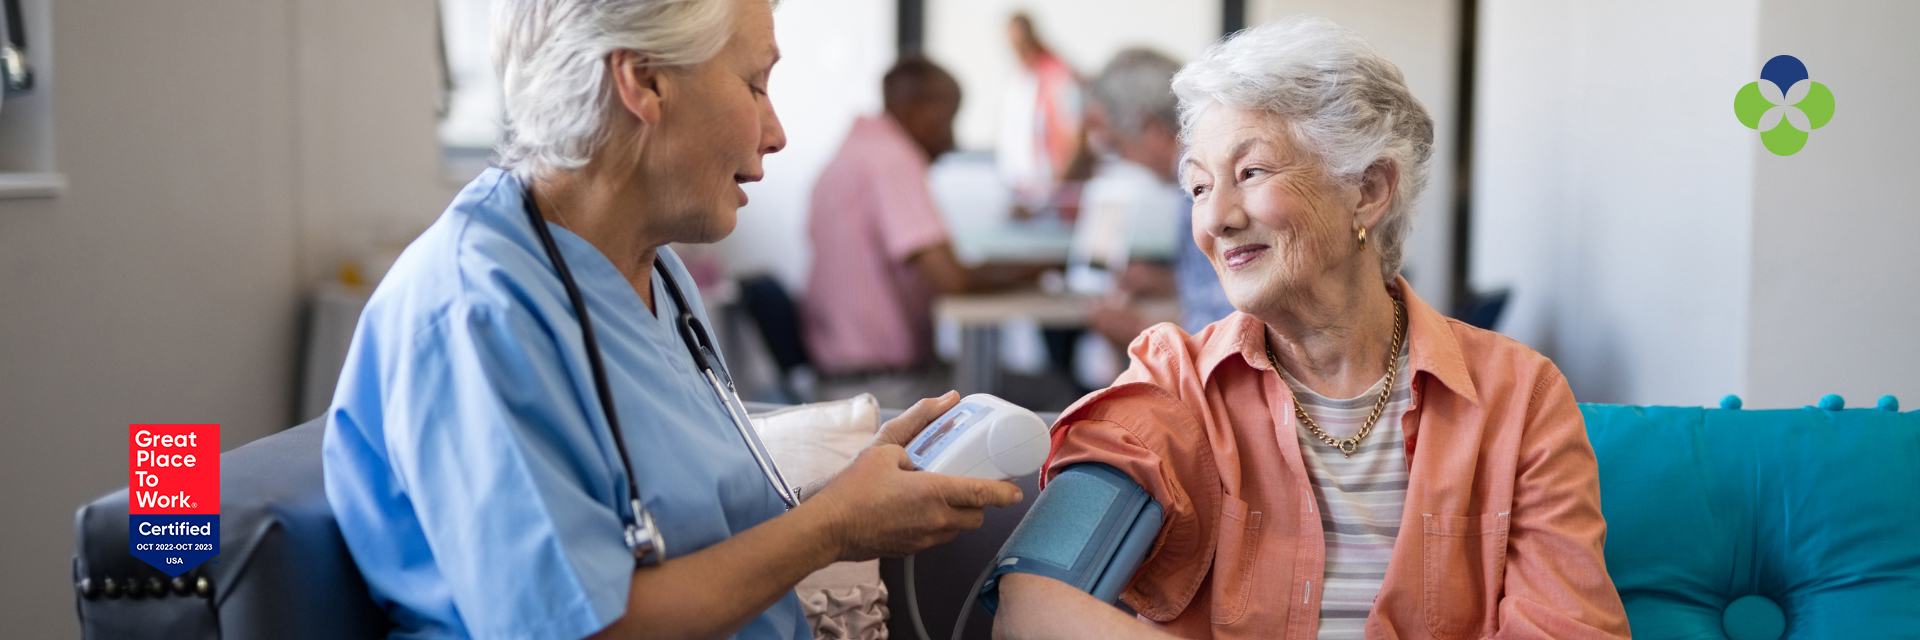 nurse taking patients blood pressure